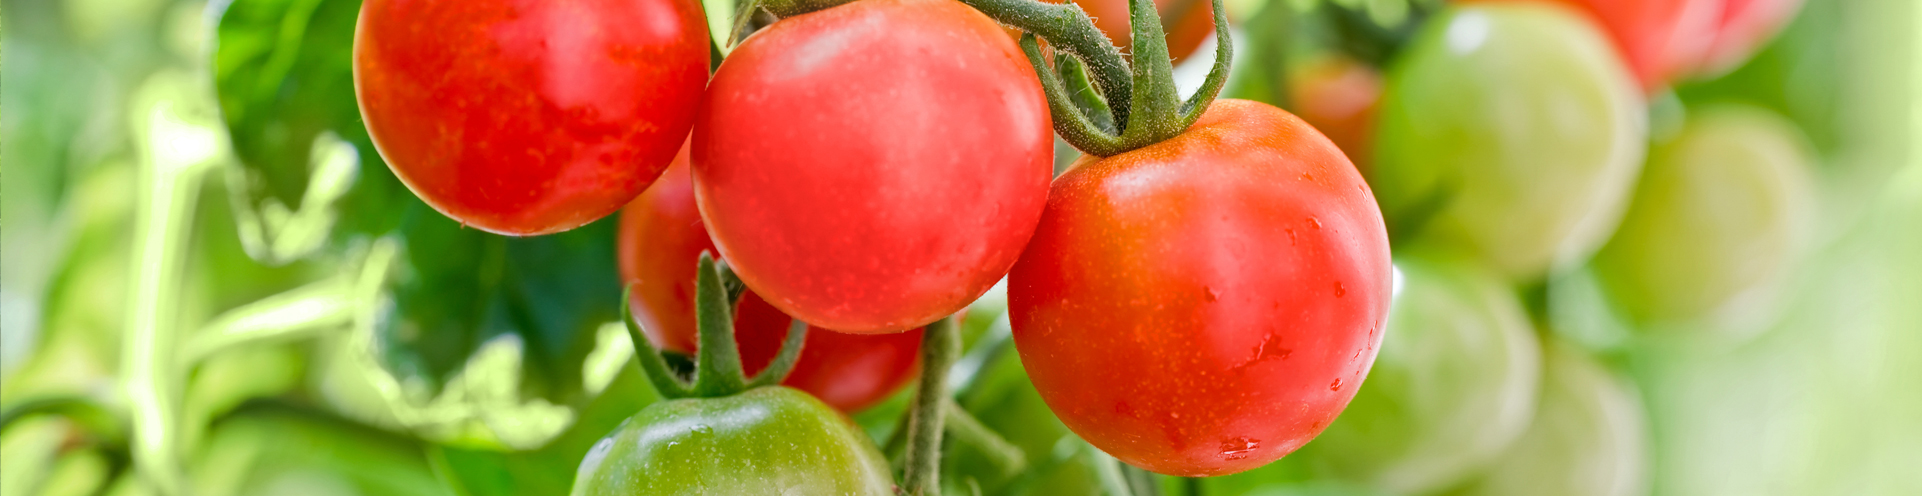 ferme-st-jean-tomates